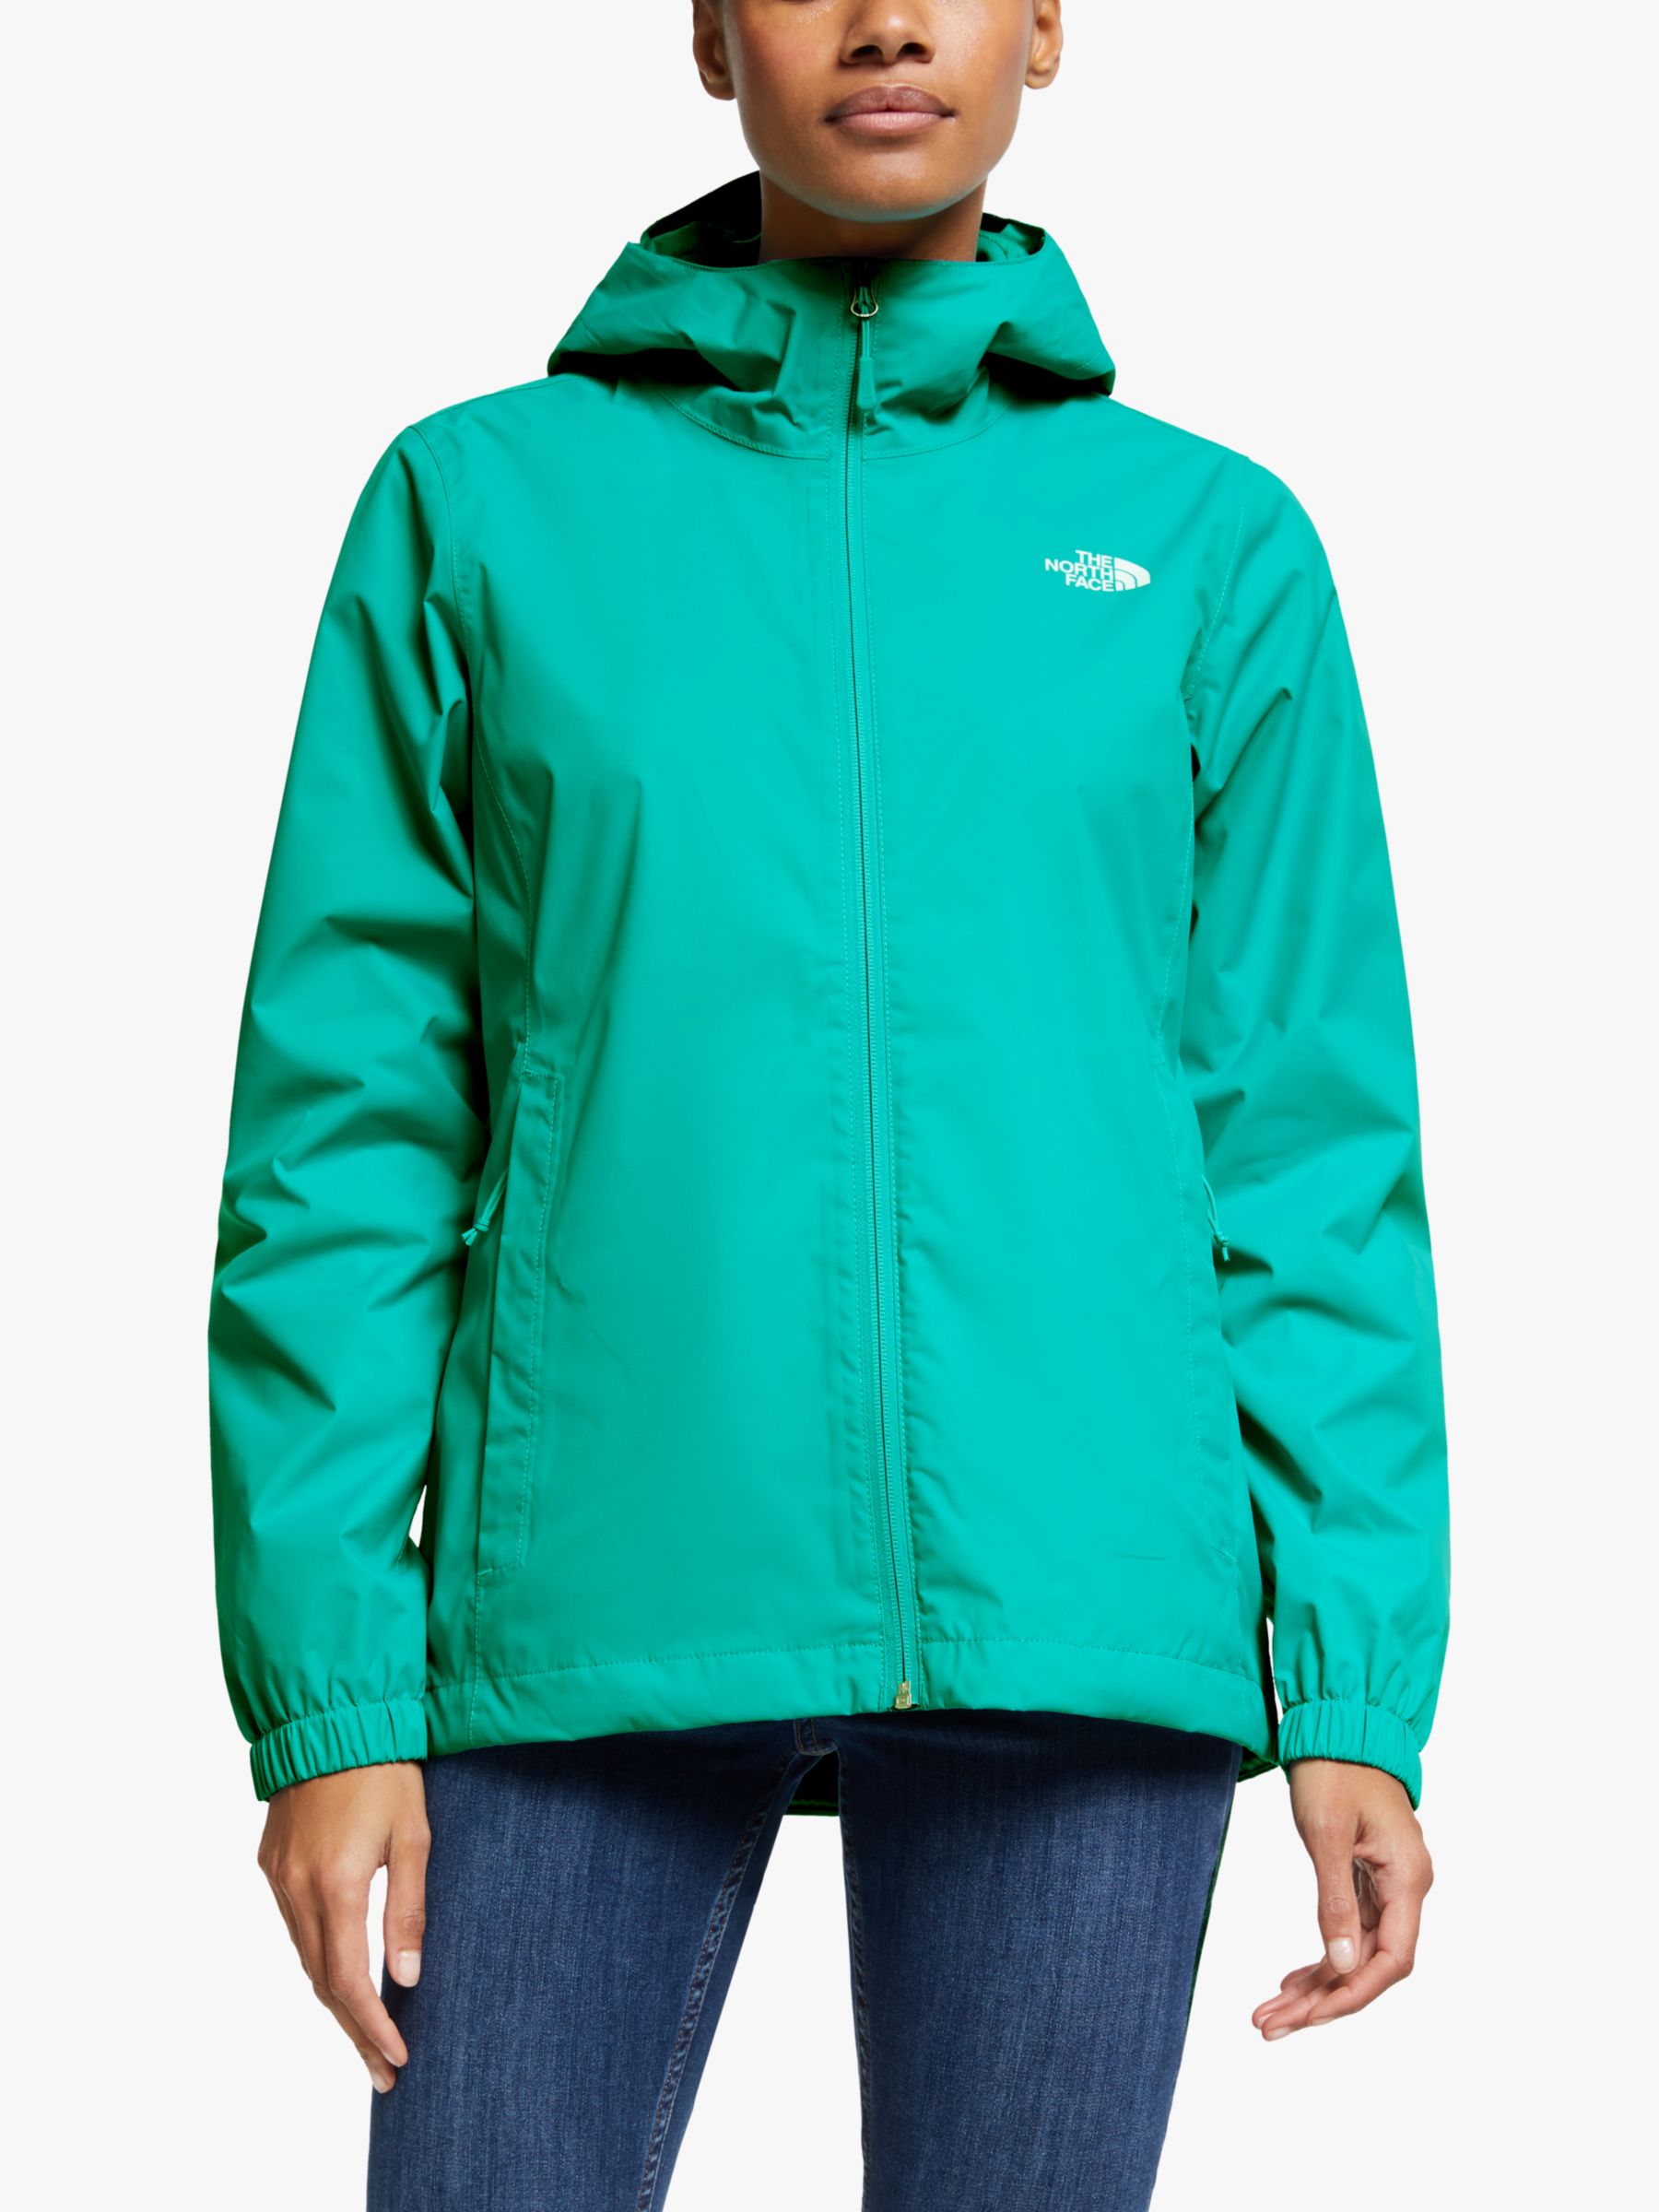 north face rain jacket green